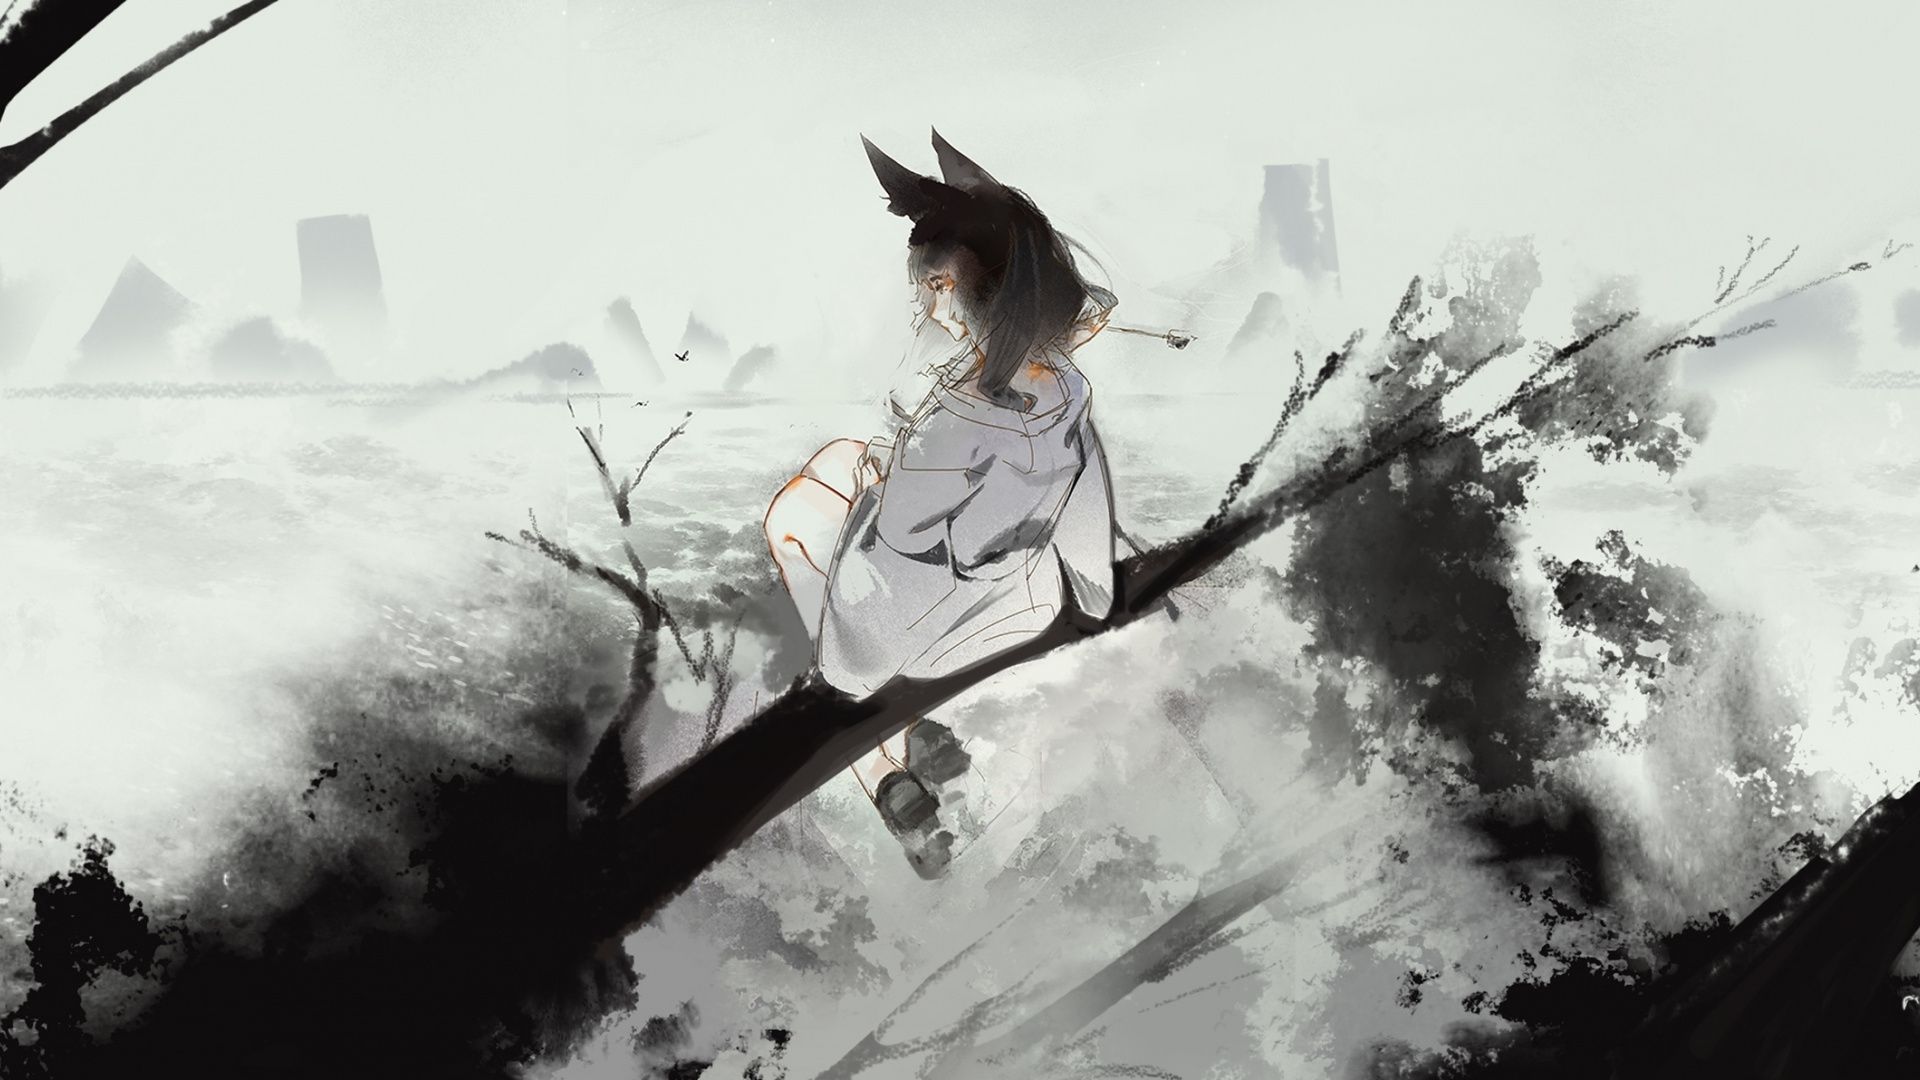 Black And White Aesthetic Desktop Anime Wallpapers - Wallpaper Cave